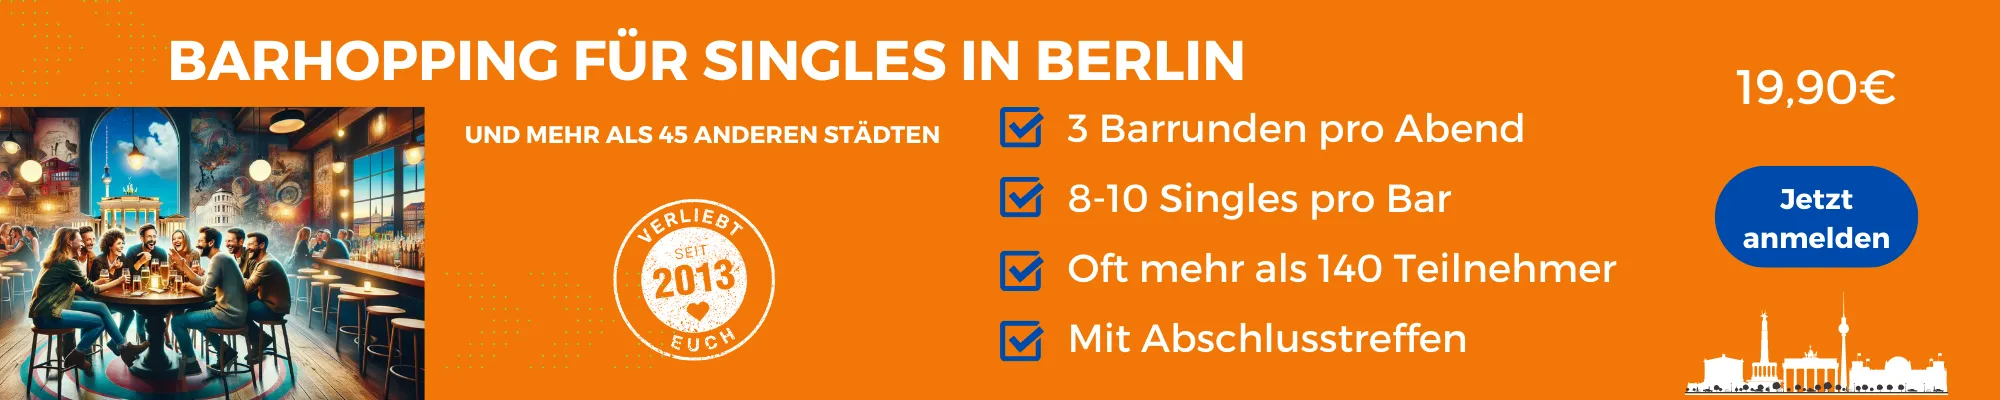 Face-to-Face-Dating-Berlin: Barhopping für Singles Berlin